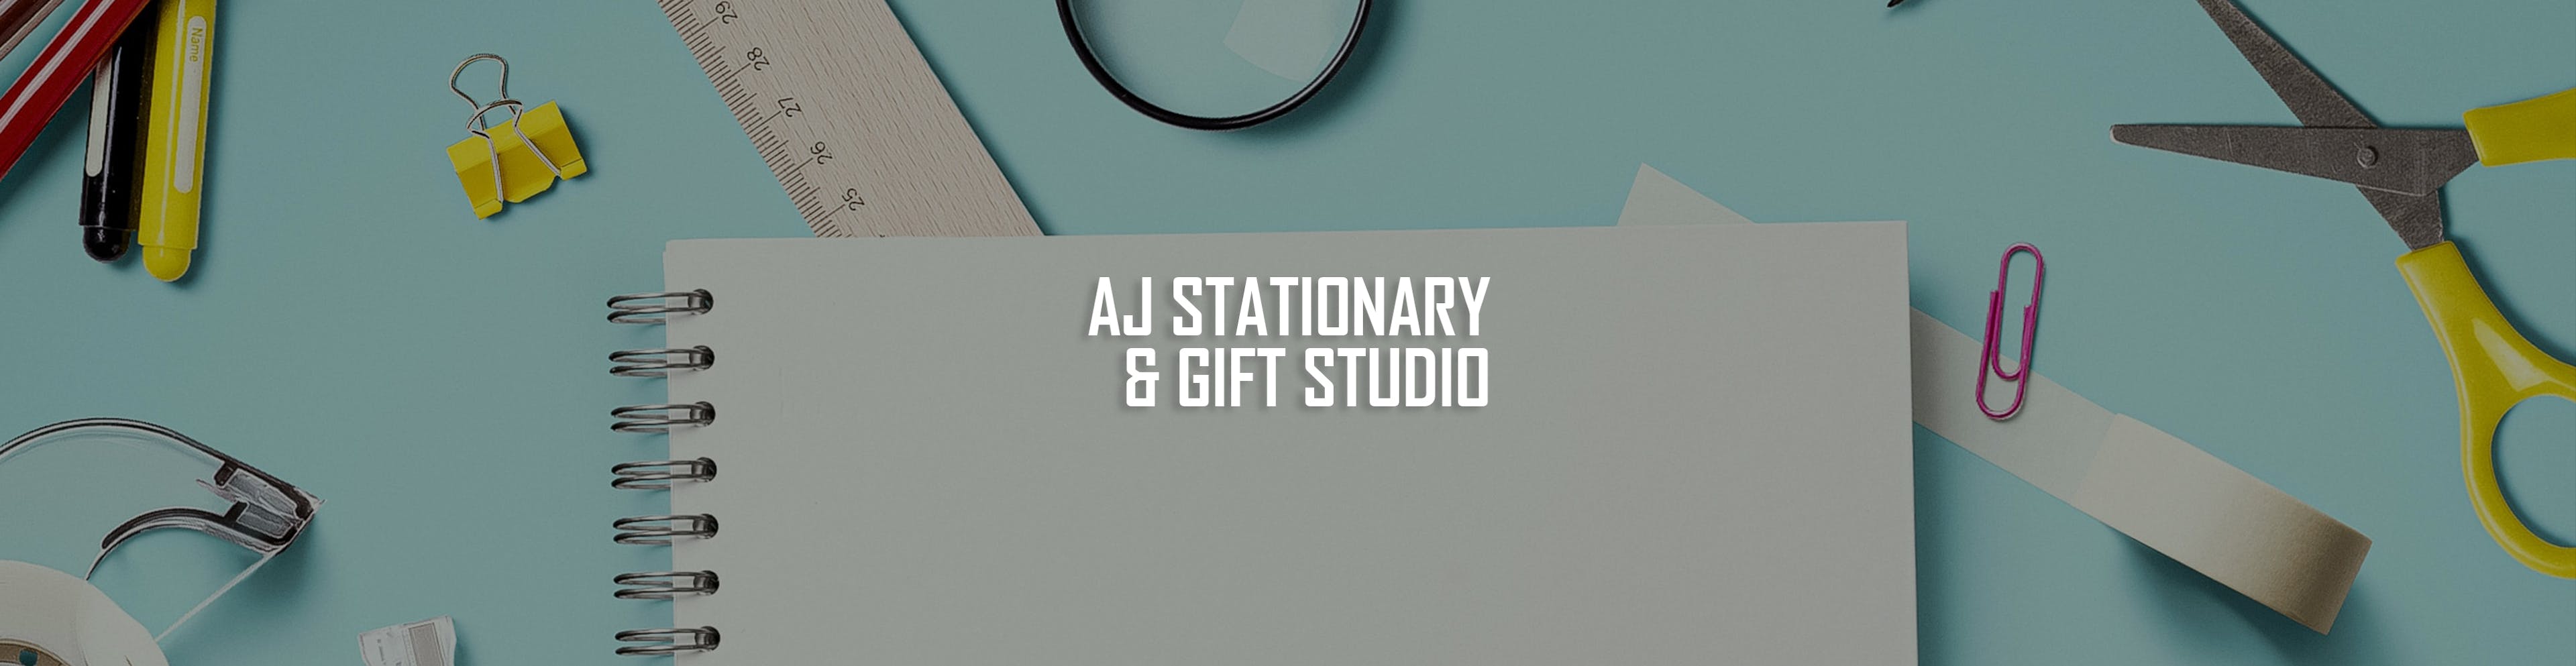 AJ Stationary & Gift Studio